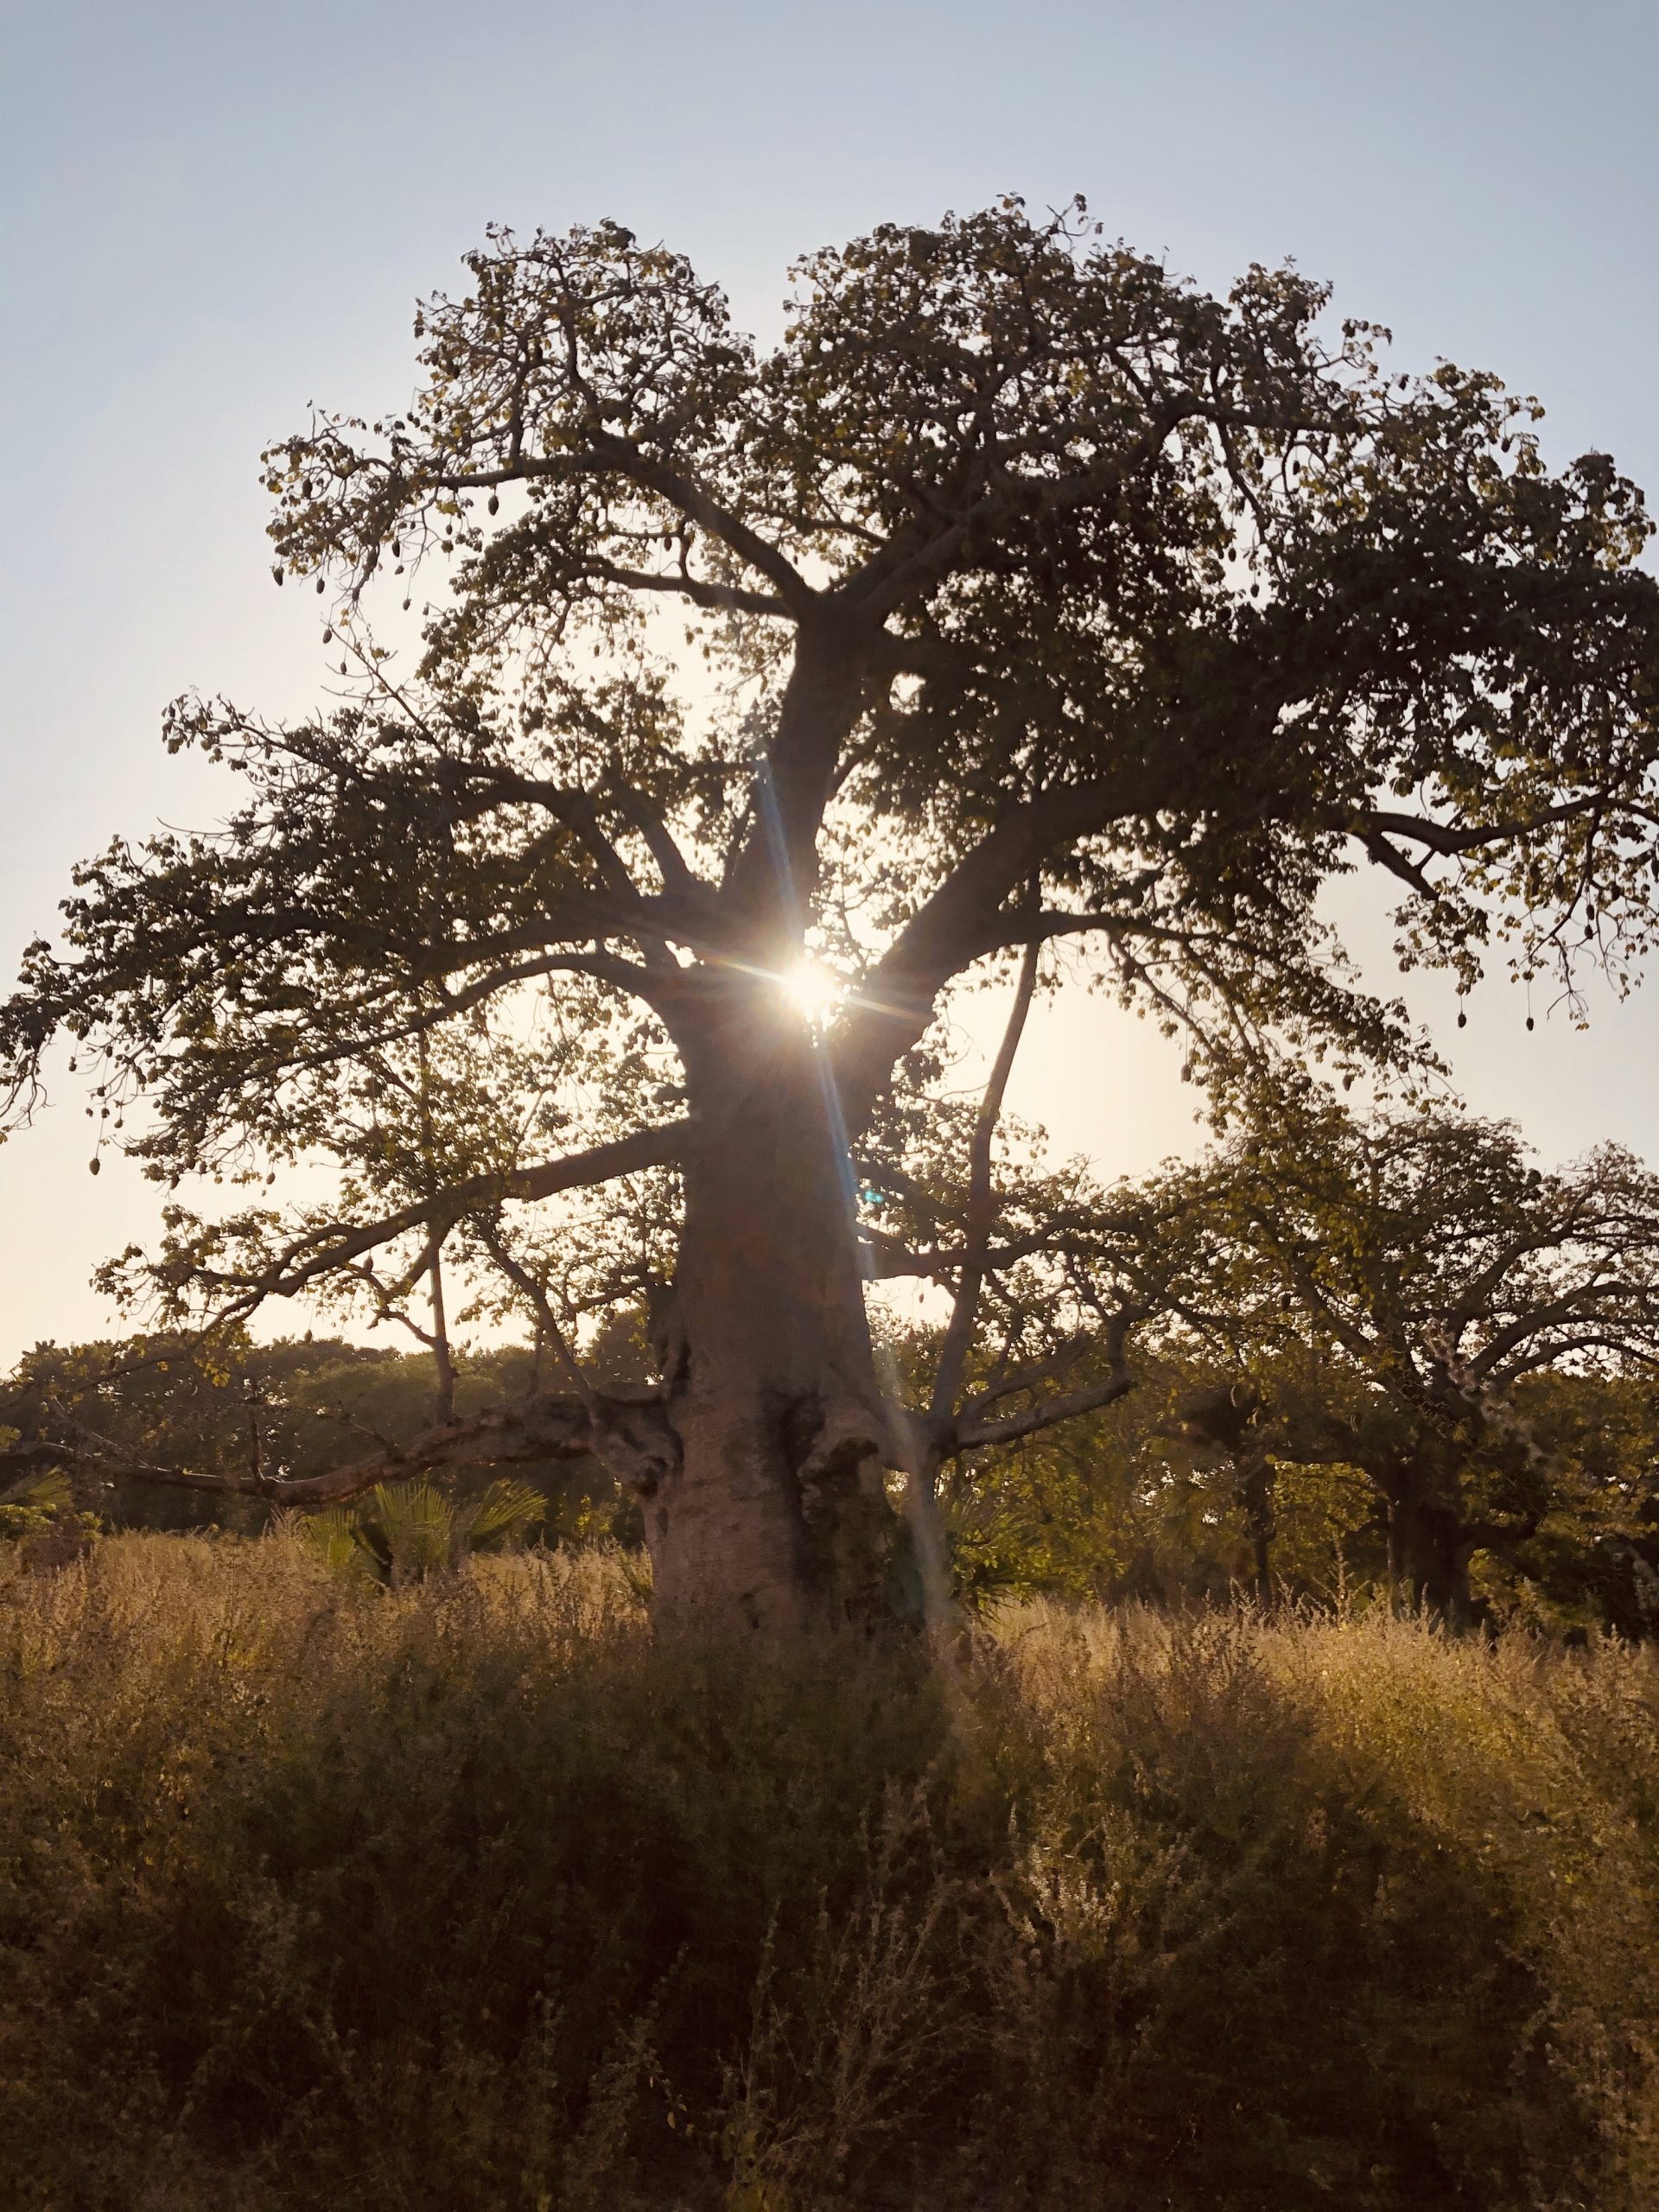 Gambia baobab